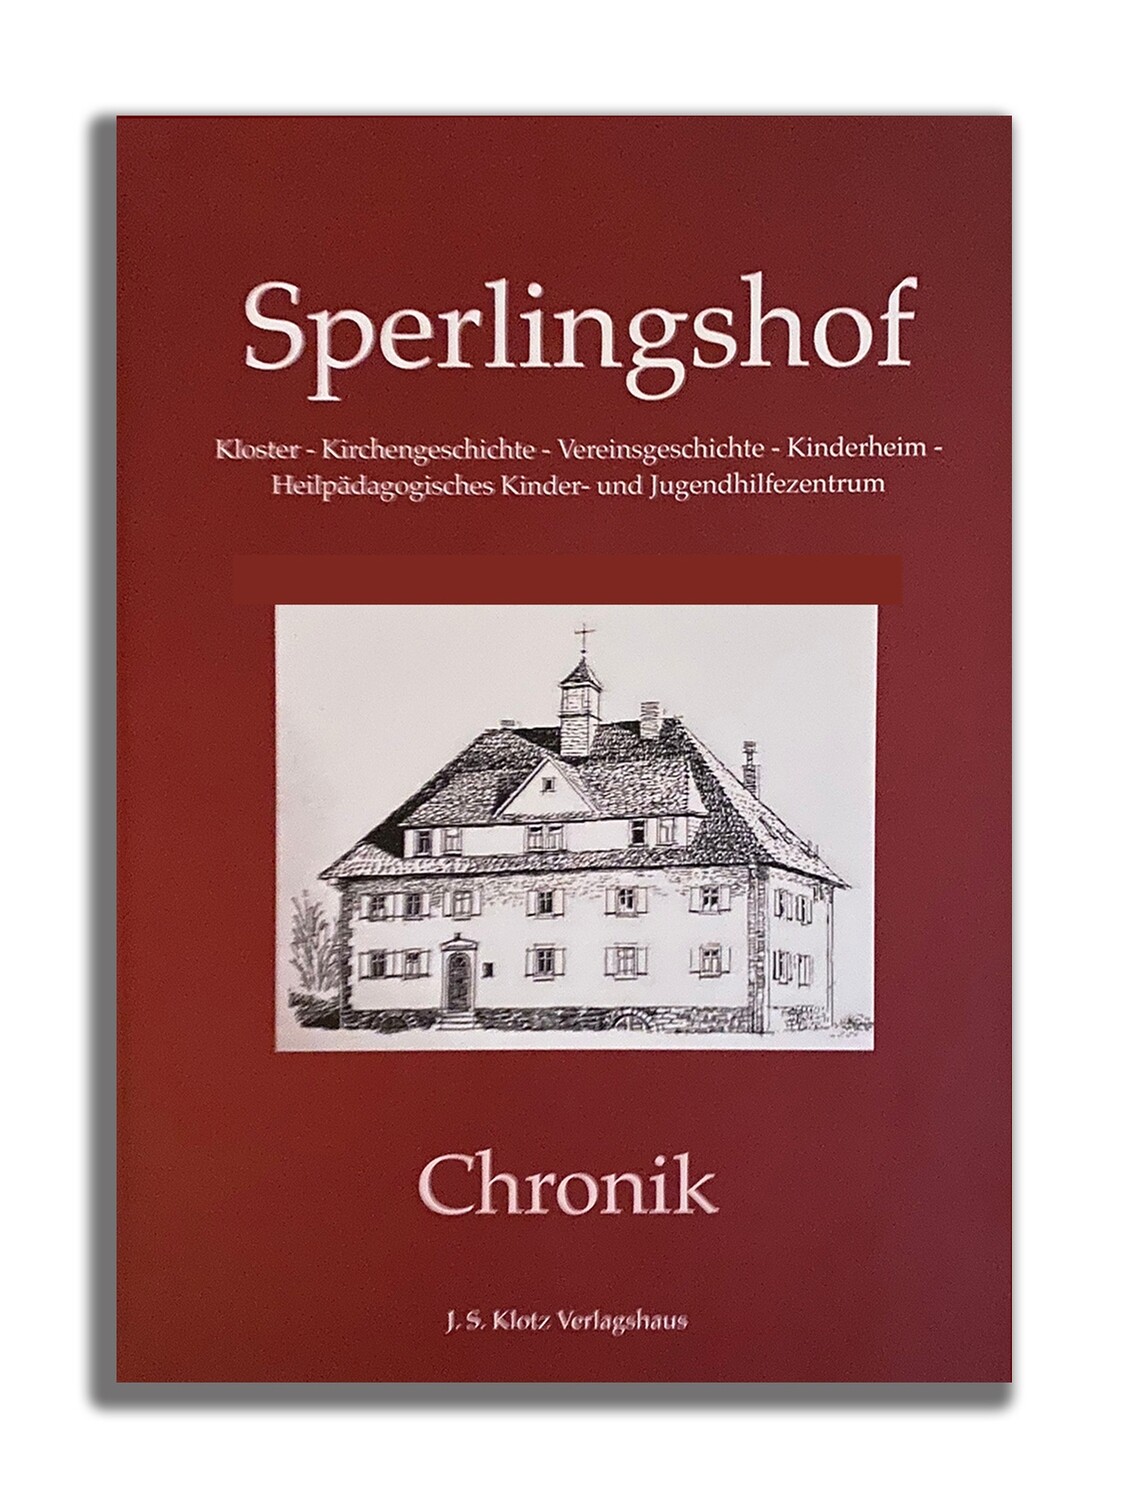 Sperlingshof - Eine Chronik